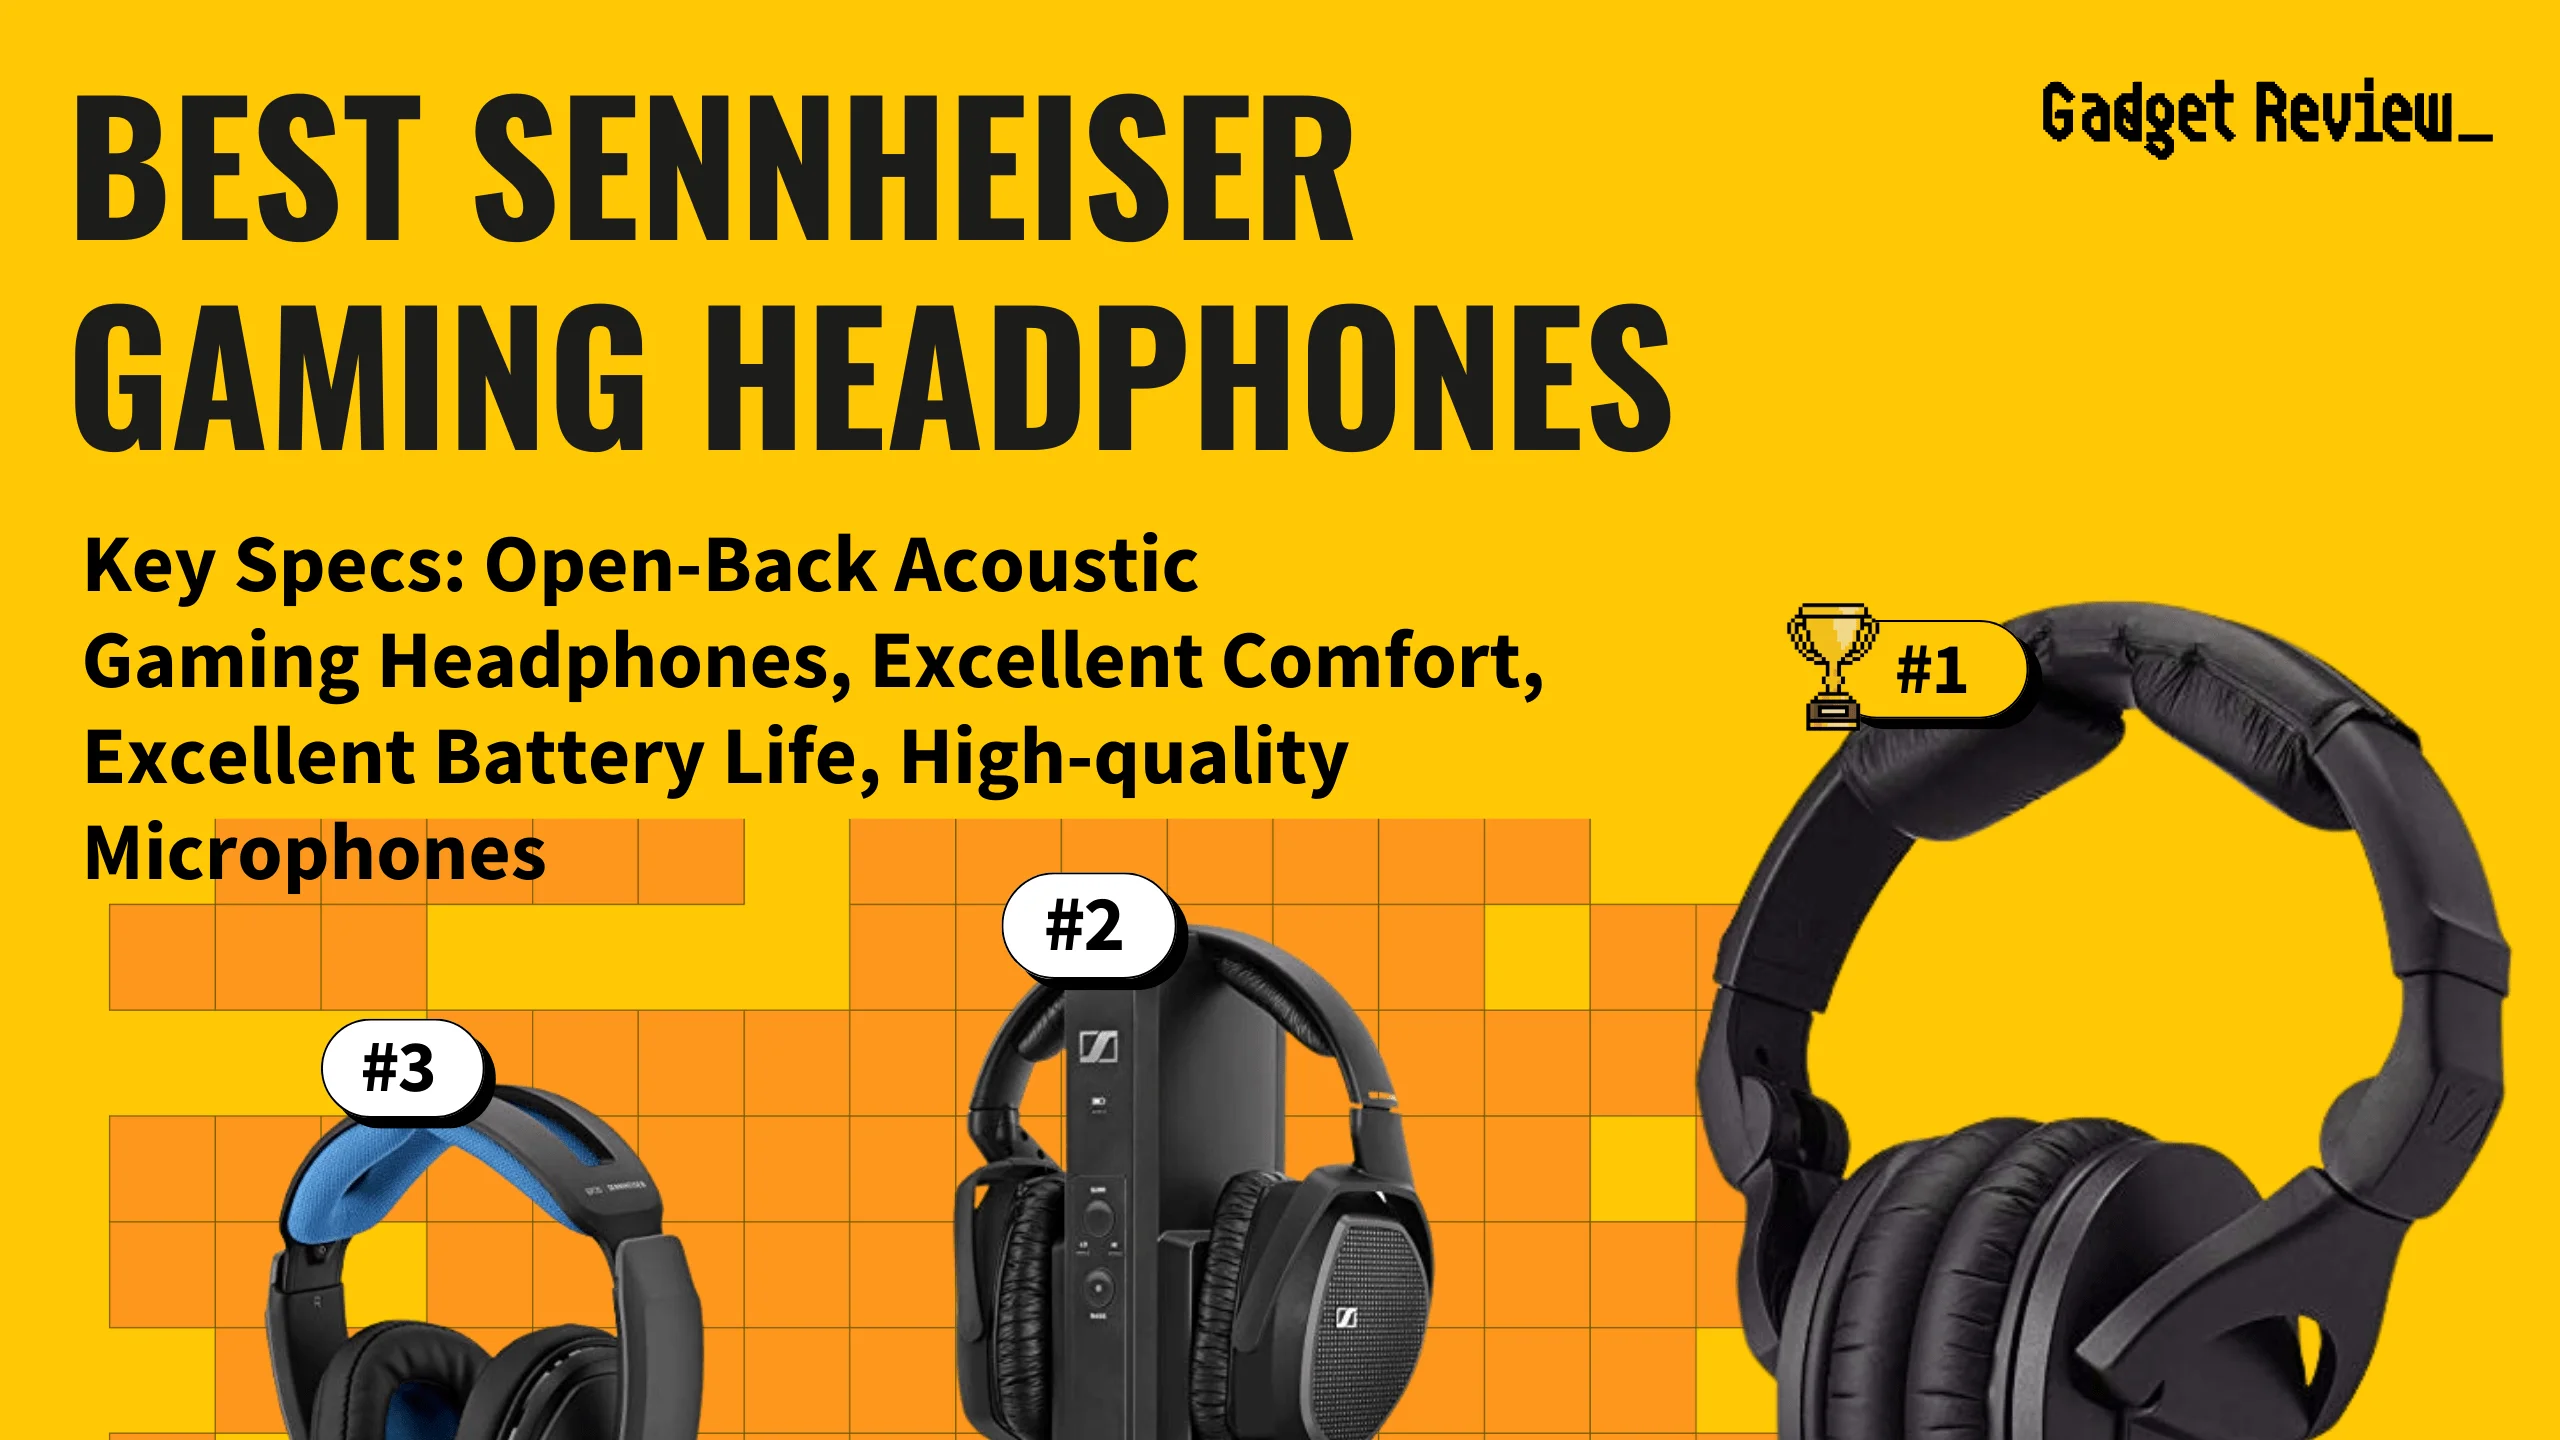 best sennheiser gaming headphones featured image that shows the top three best gaming headset models